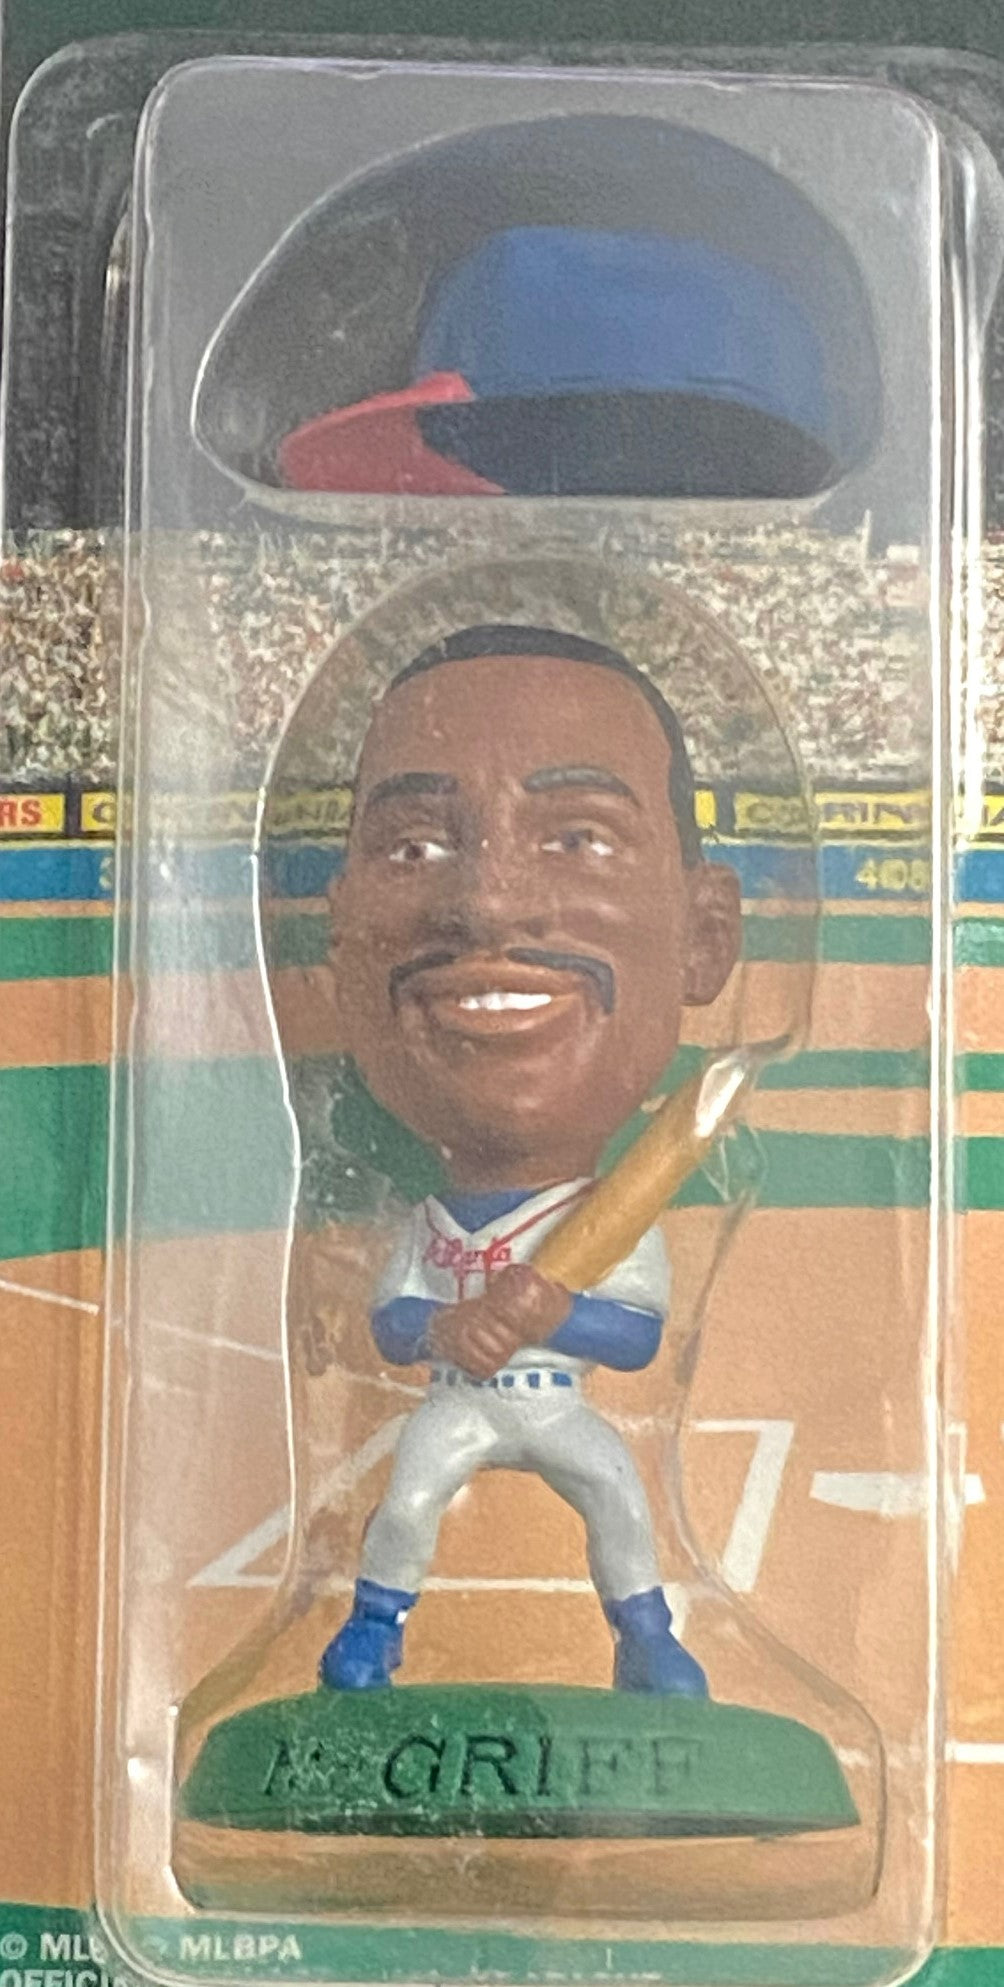 Fred McGriff 1996 MLB Atlanta Braves Headliner Figurine by Corinthian